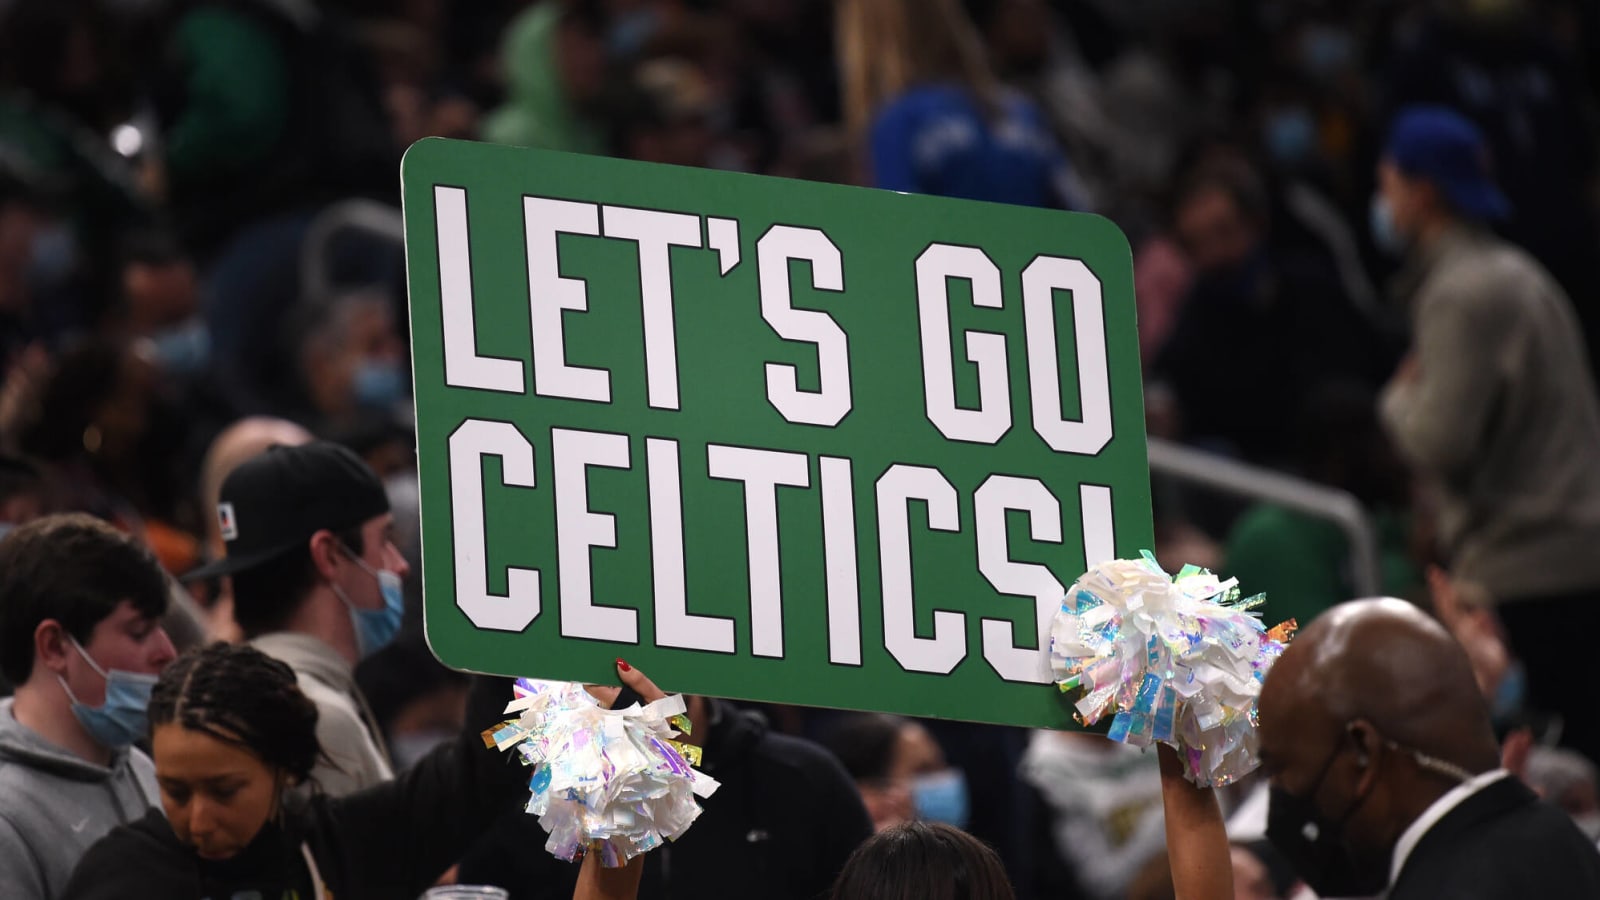 How many NBA championships have the Boston Celtics won?